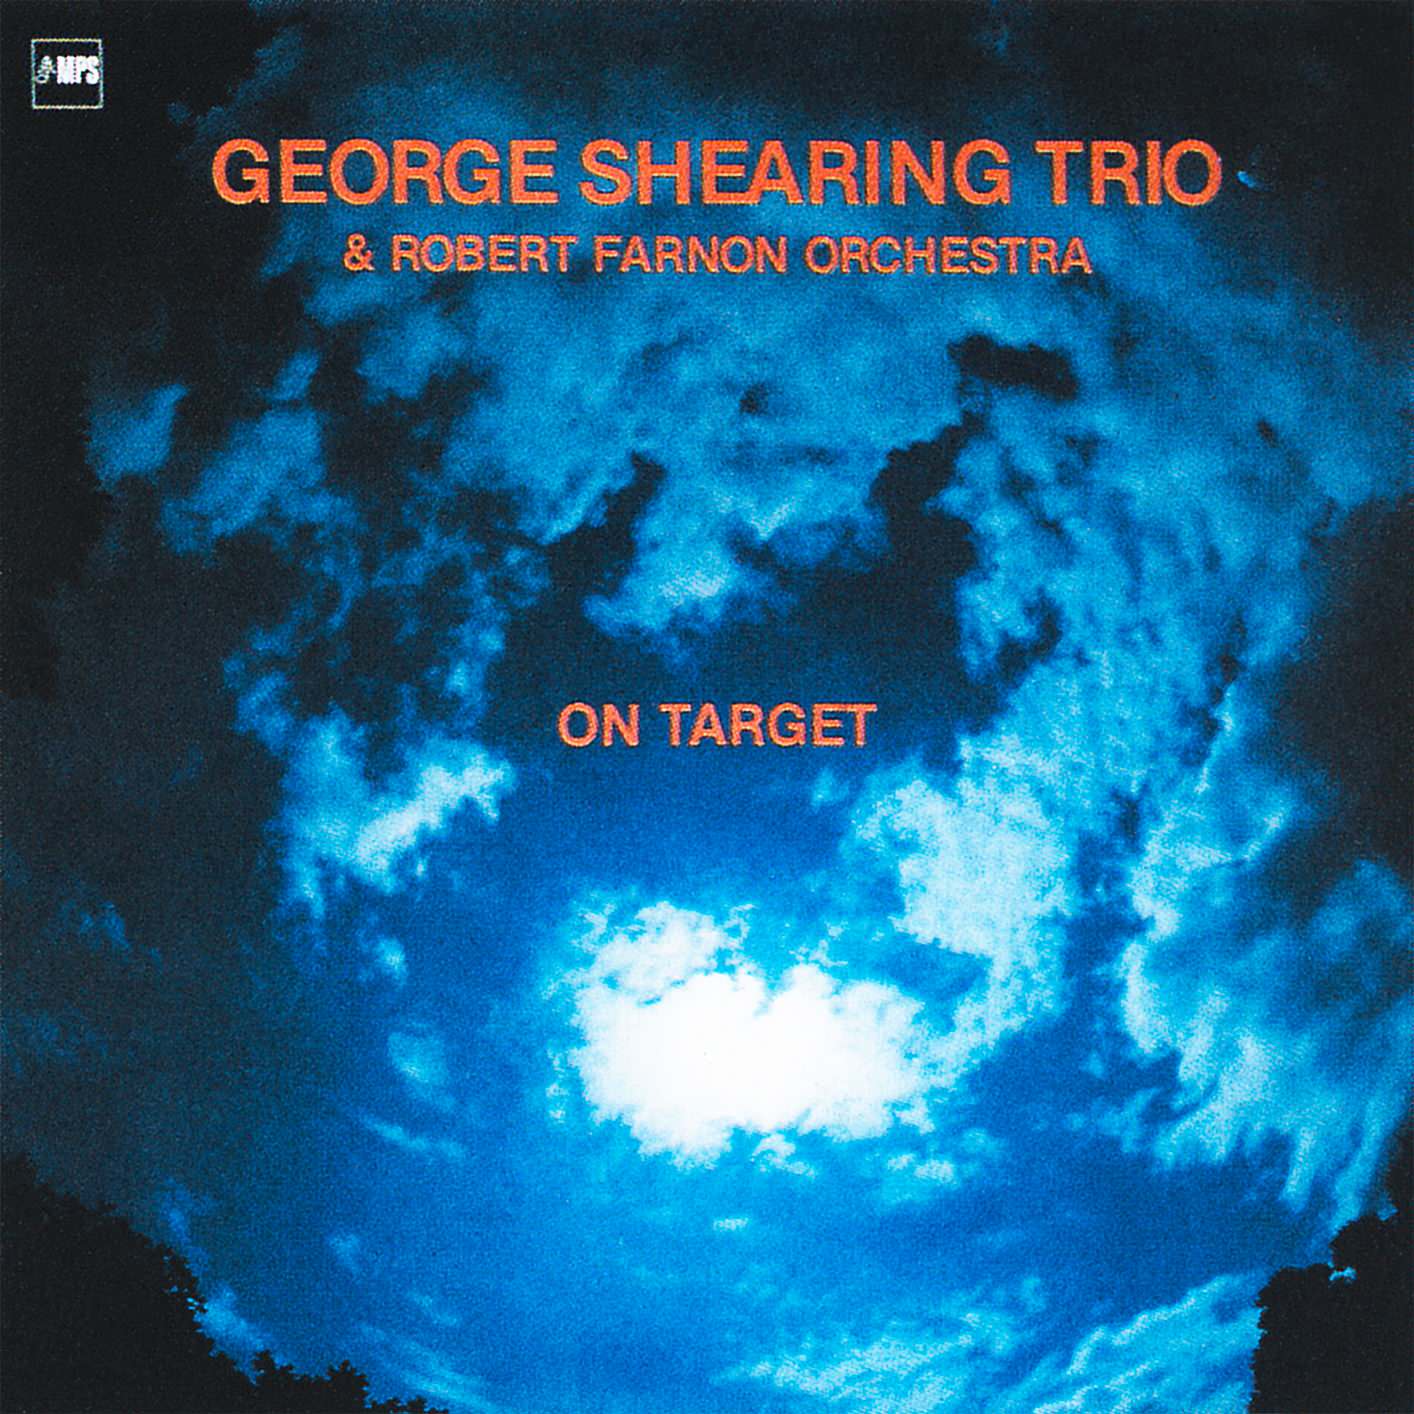 George Shearing Trio & The Robert Farnon Orchestra - On Target (1982/2014) [HighResAudio FLAC 24bit/88,2kHz]